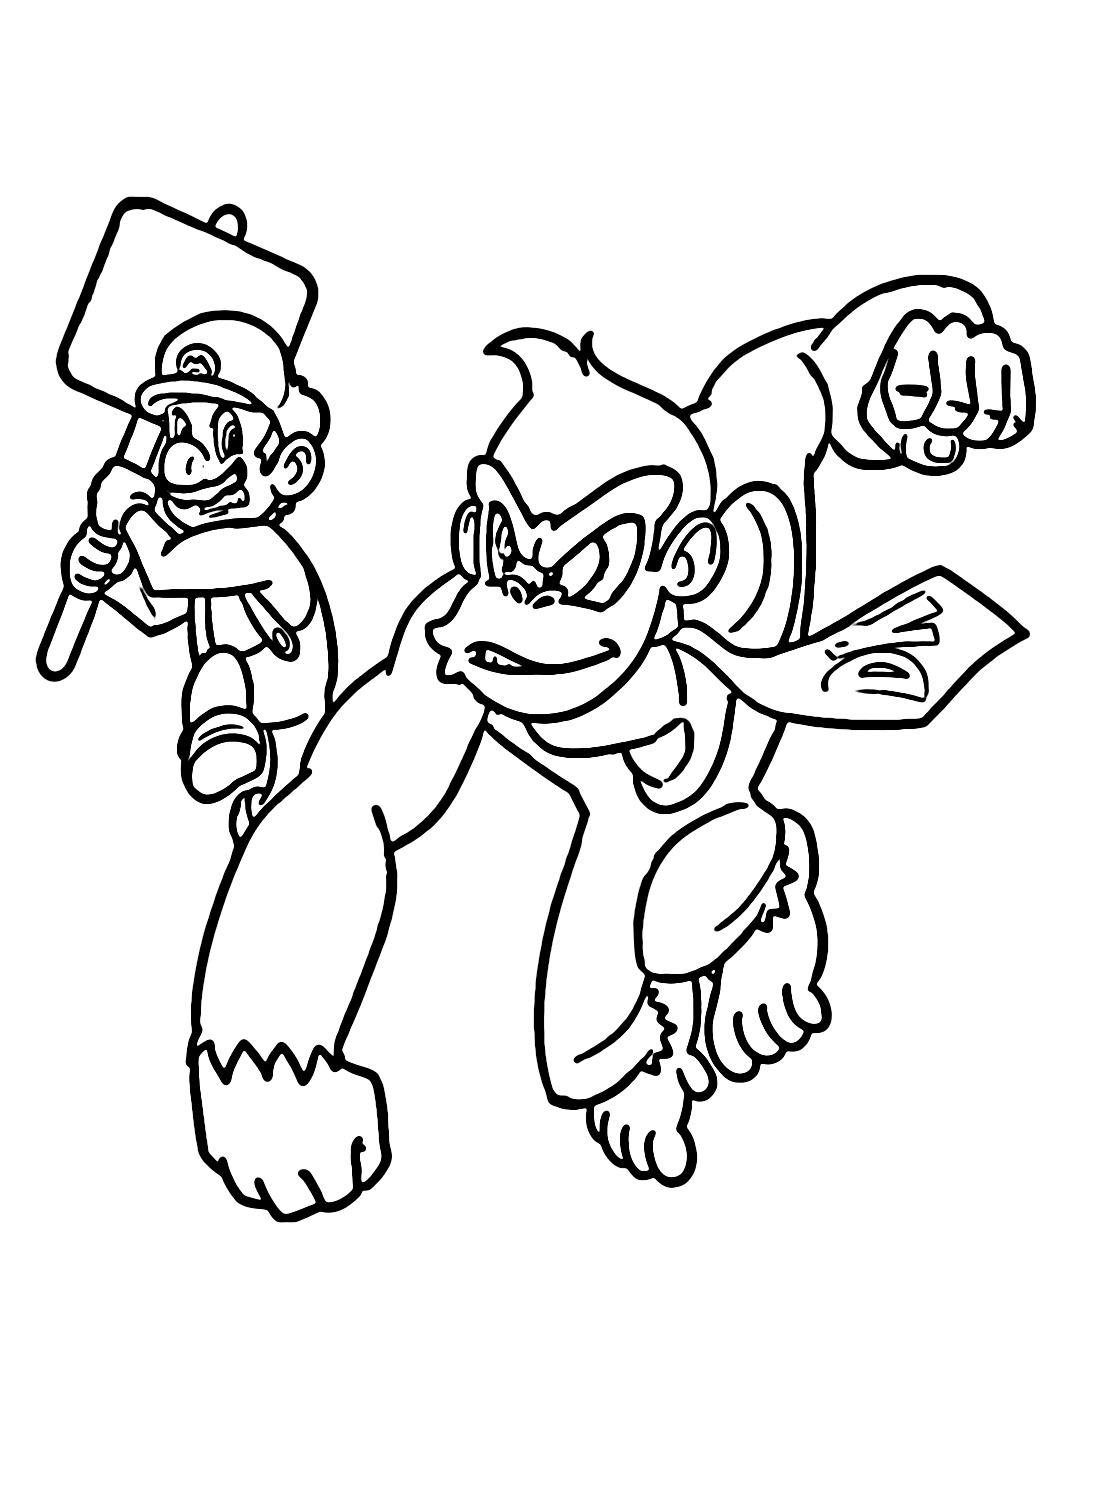 Mario contra Donkey Kong de Donkey Kong